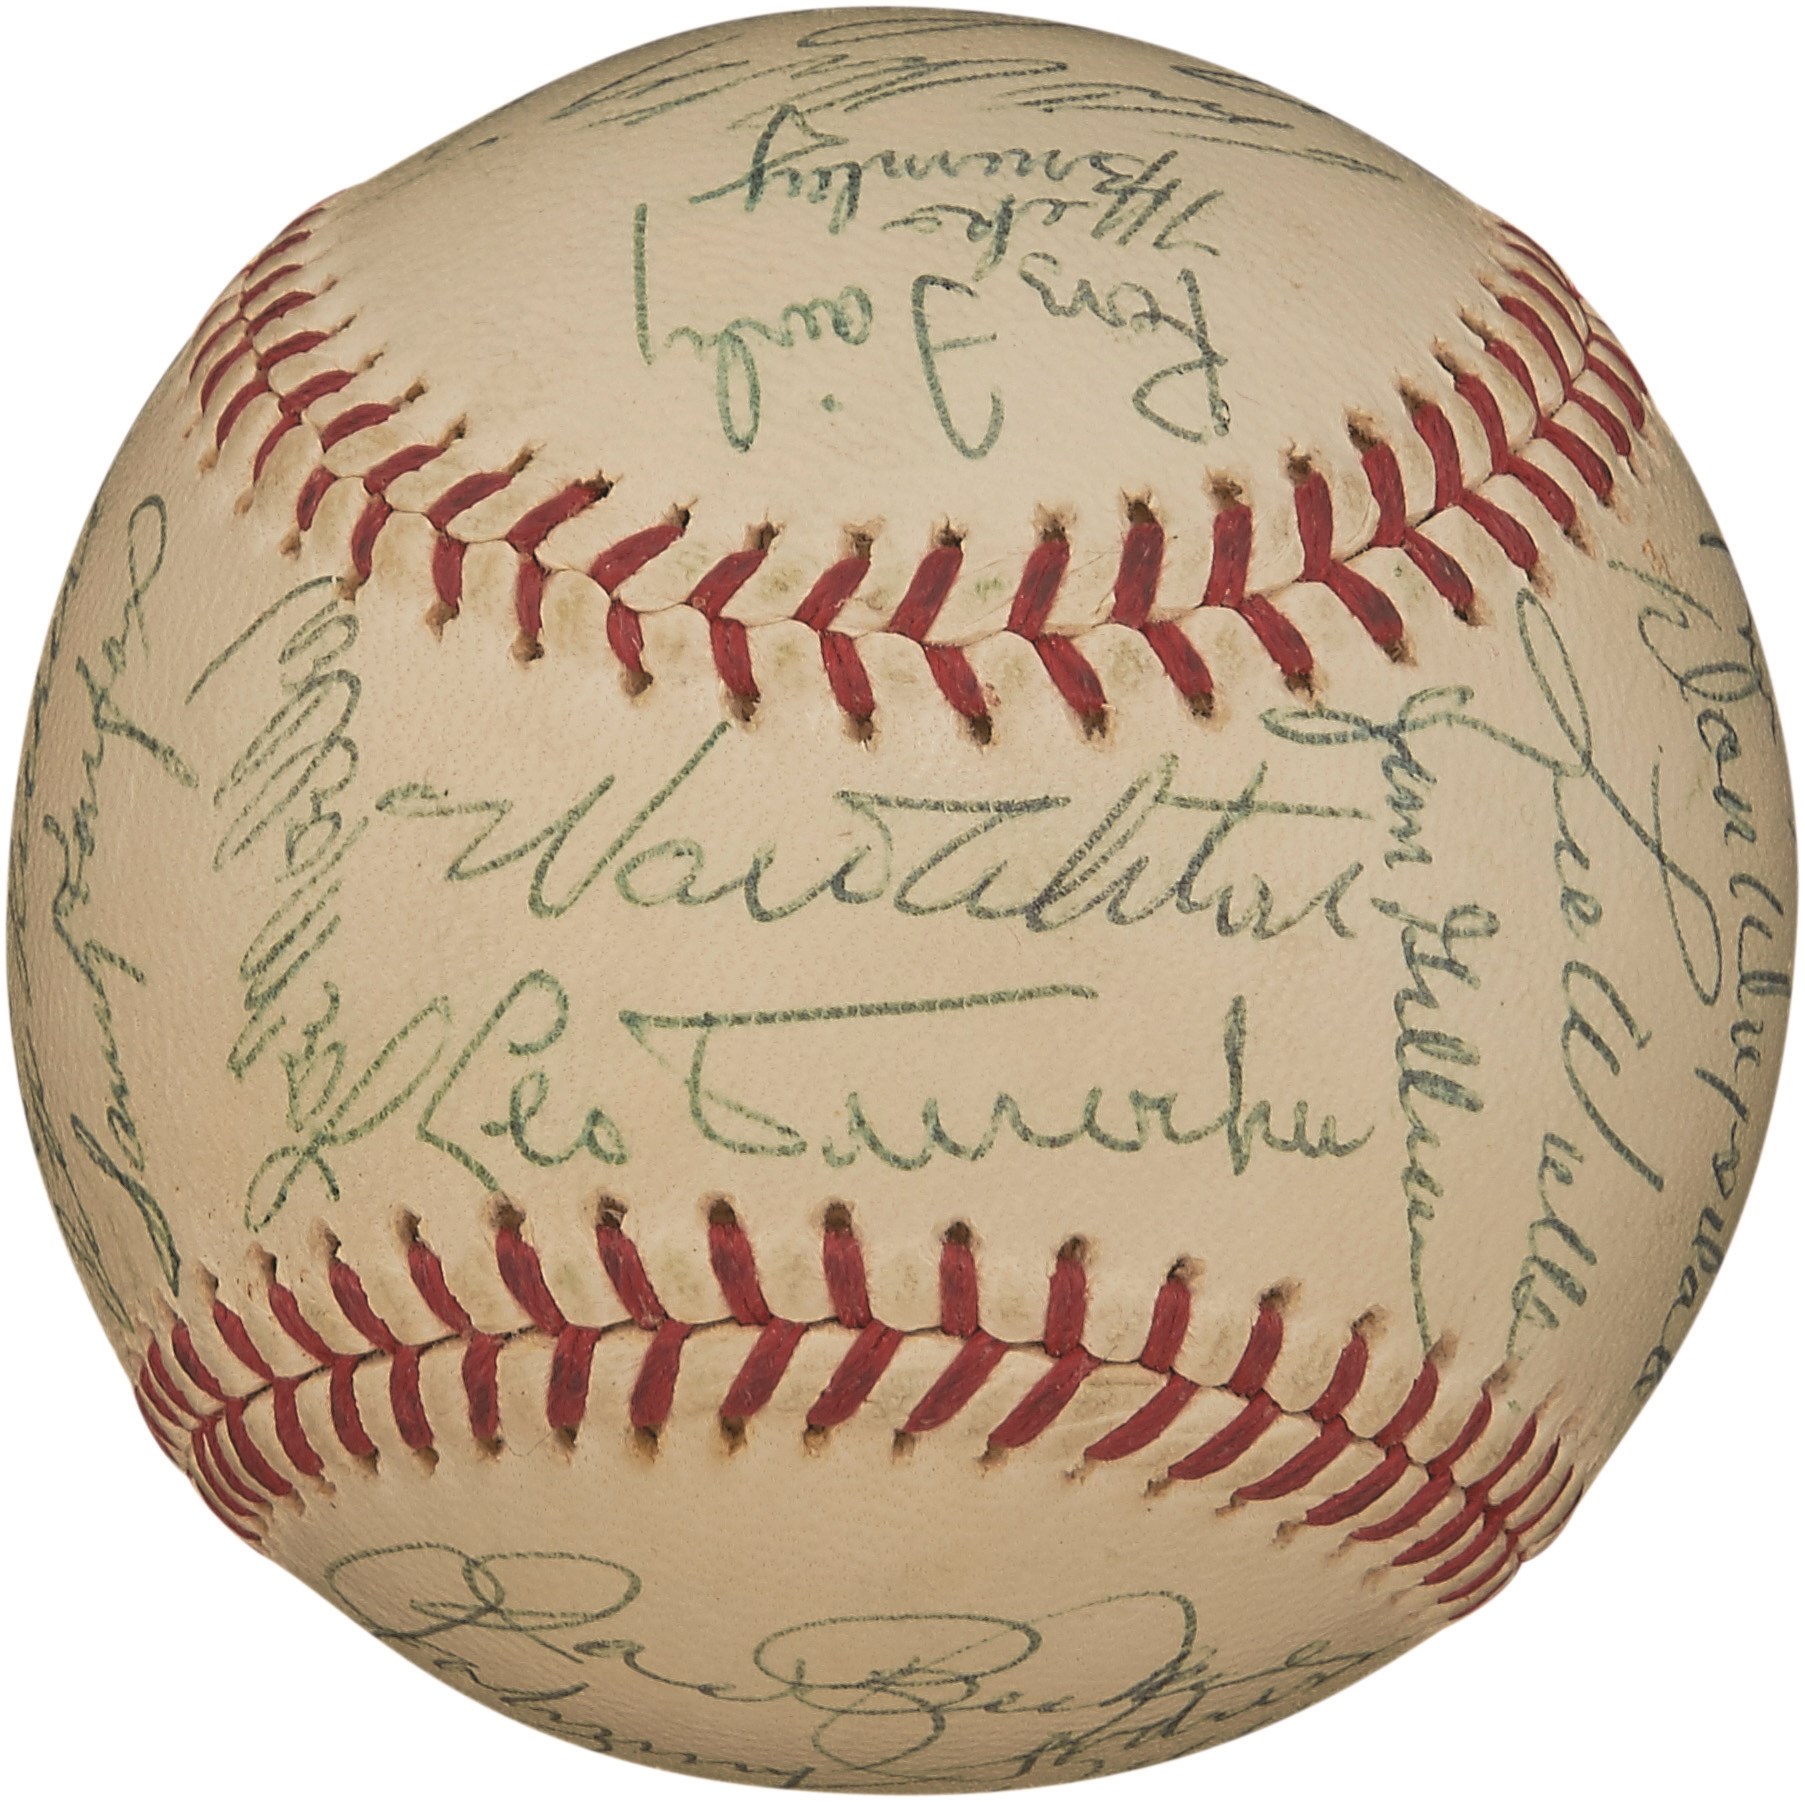 Baseball Autographs - 1963 World Champion Los Angeles Dodgers Team-Signed Baseball (PSA 9, HIGEST GRADED)